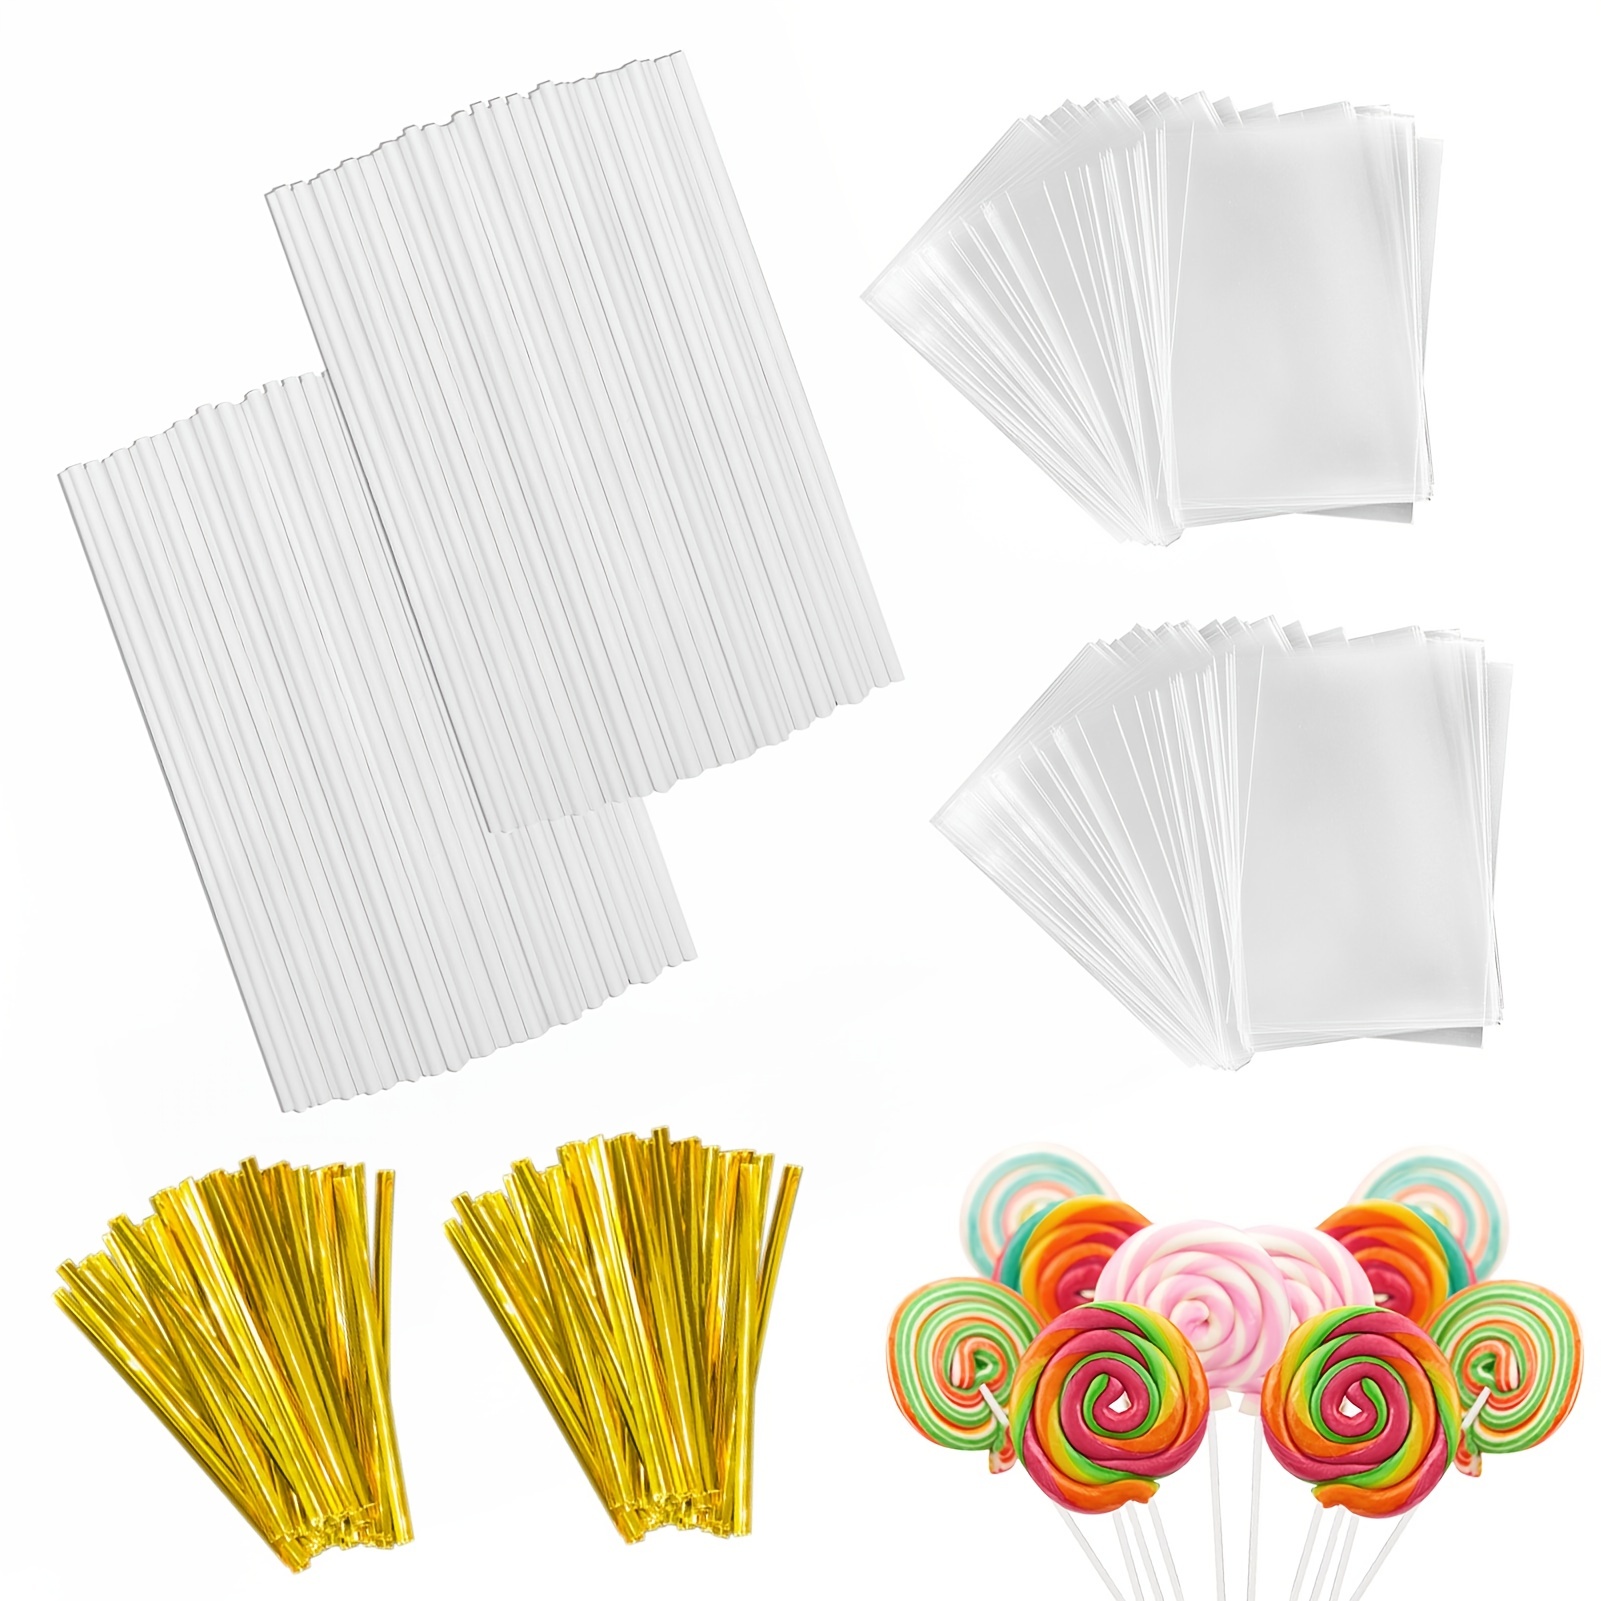  200Pcs 6 Inch White Paper Lollipop Sticks, Paper